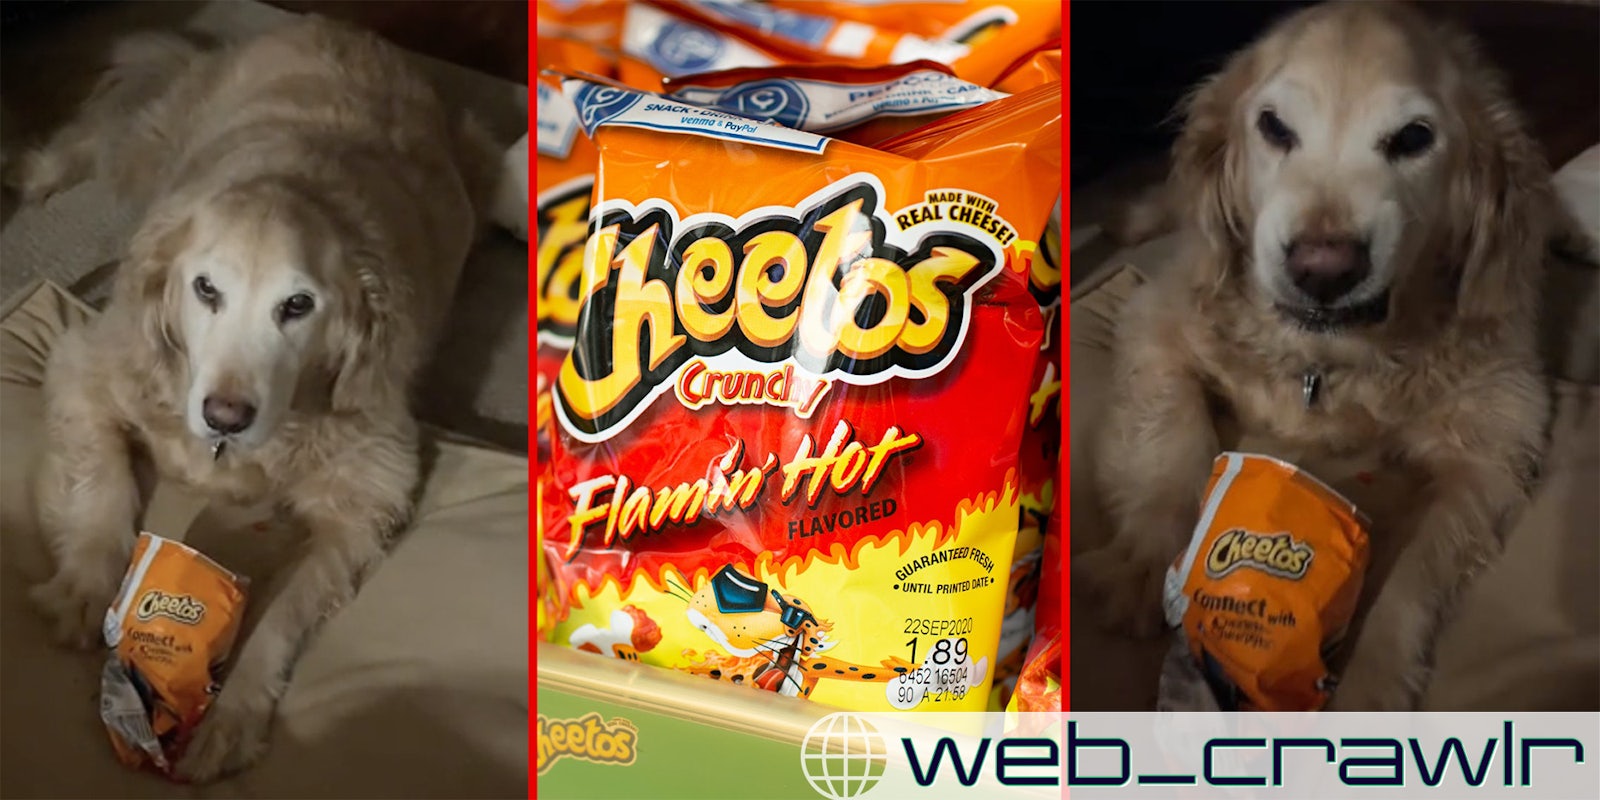 Golden retriever refuses to surrender Flamin’ Hot Cheetos